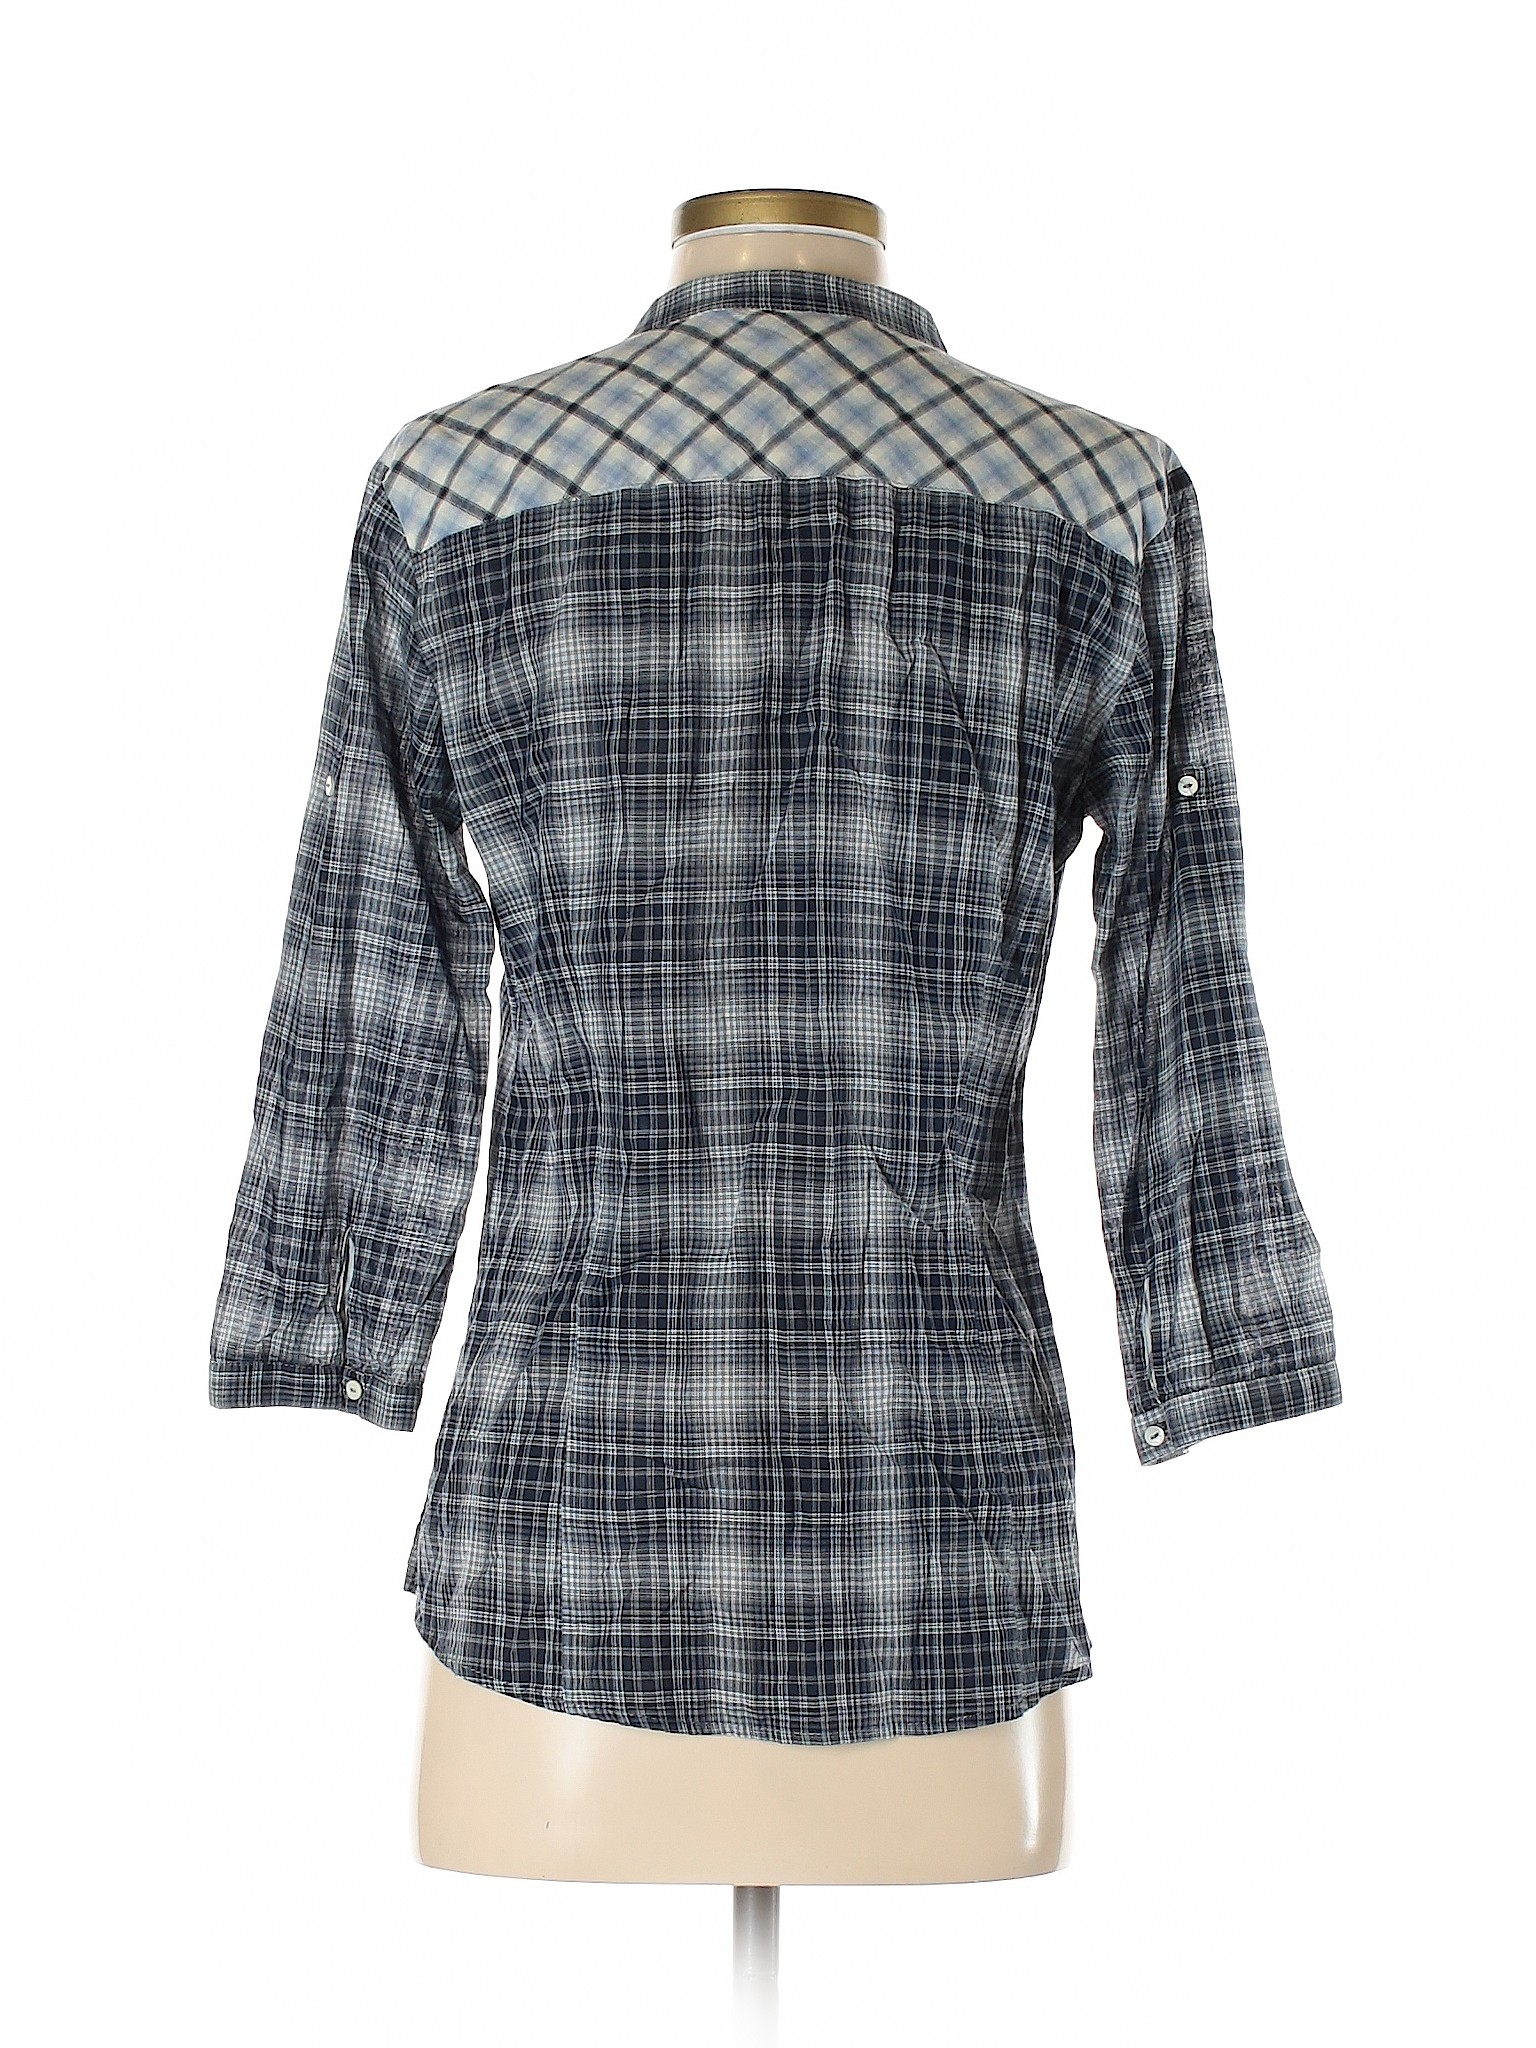 Zara Women Blue 3/4 Sleeve Button-Down Shirt S | eBay